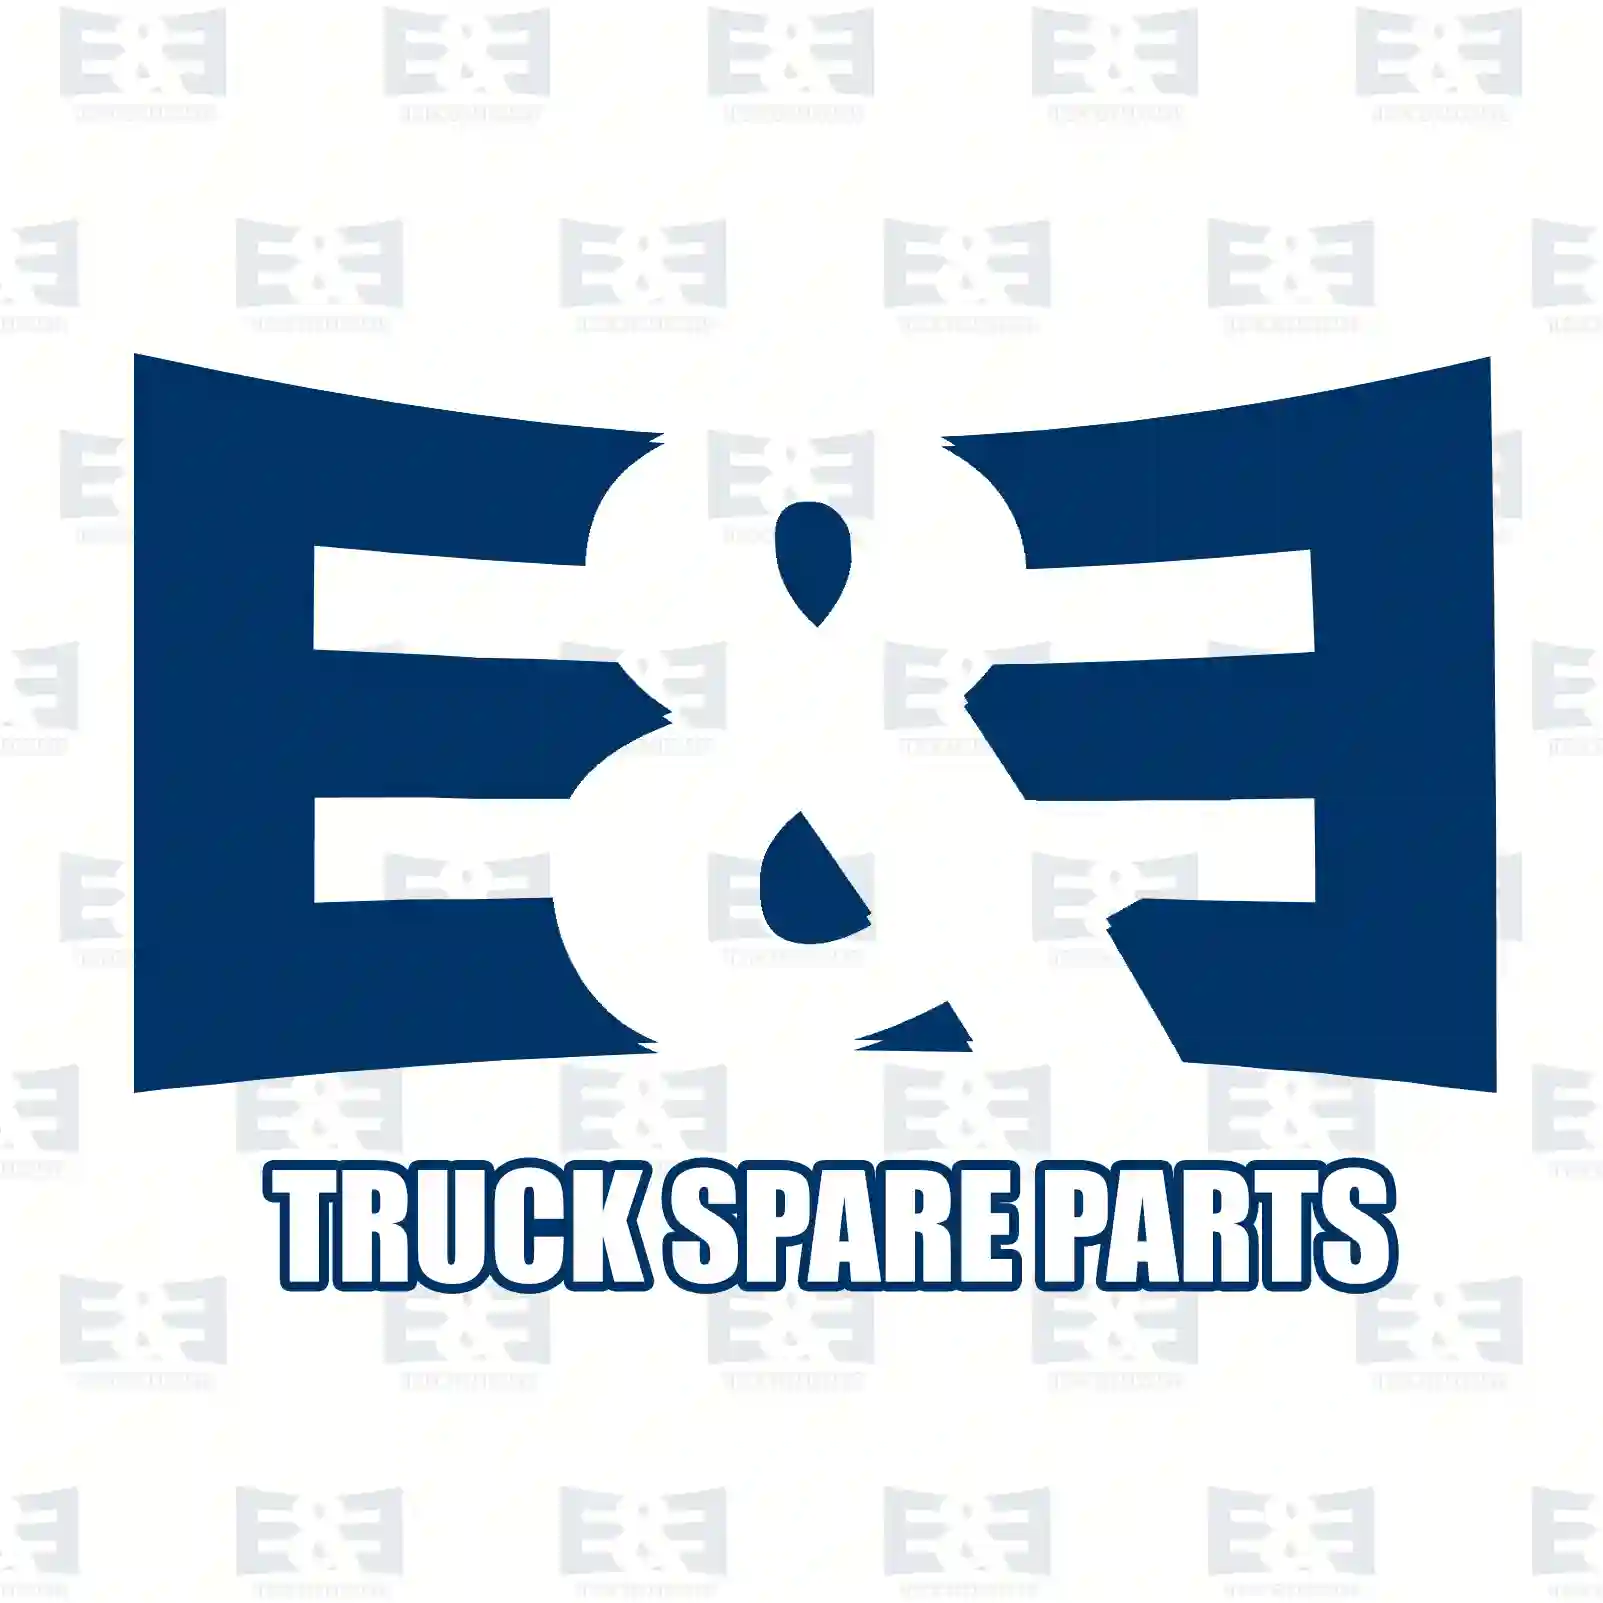 Engine mounting, 2E2206710, 81962100582, 81962100583, 81962100598, ||  2E2206710 E&E Truck Spare Parts | Truck Spare Parts, Auotomotive Spare Parts Engine mounting, 2E2206710, 81962100582, 81962100583, 81962100598, ||  2E2206710 E&E Truck Spare Parts | Truck Spare Parts, Auotomotive Spare Parts